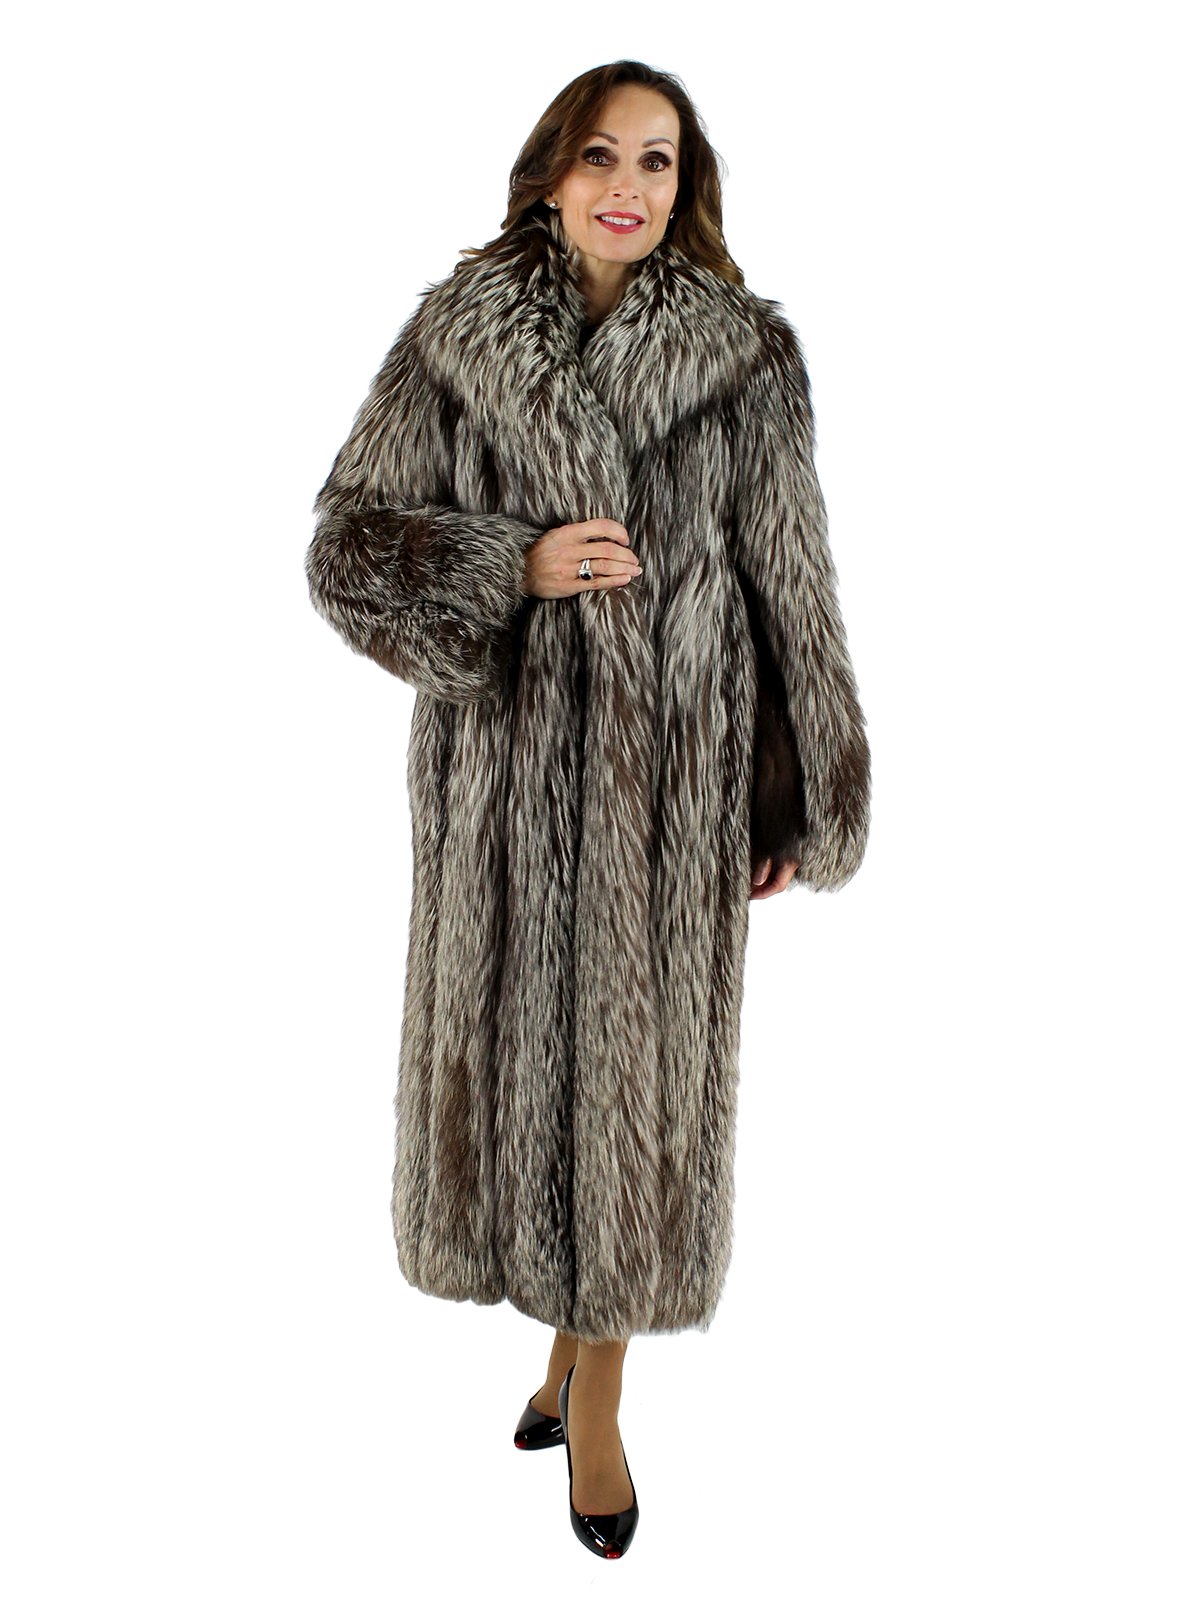 Red Fox Fur Coat - Women's Fur Coat - Small | Estate Furs